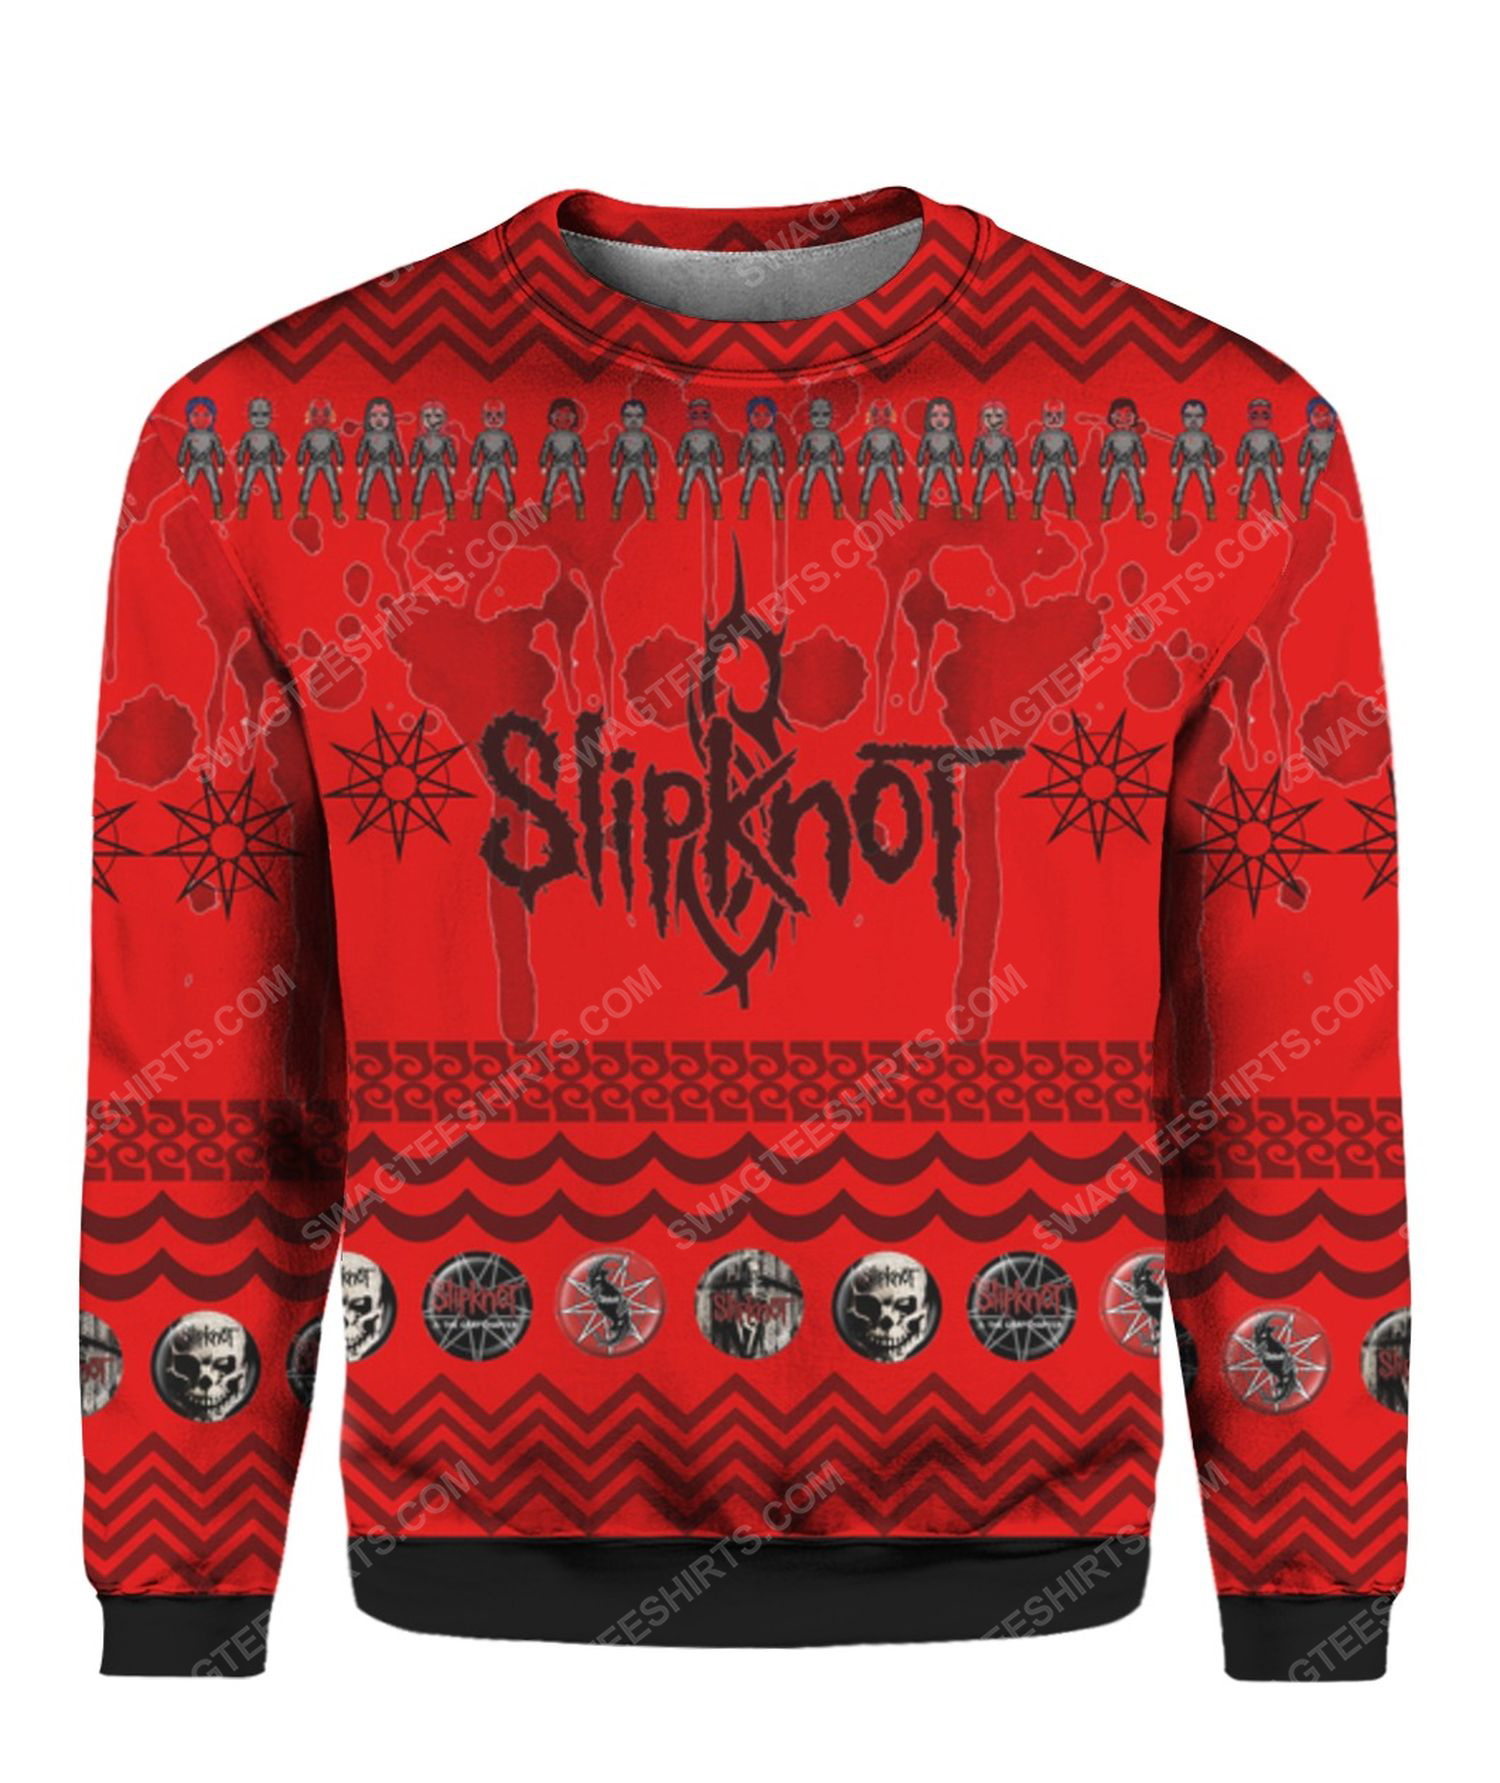 Slipknot band all over print ugly christmas sweater